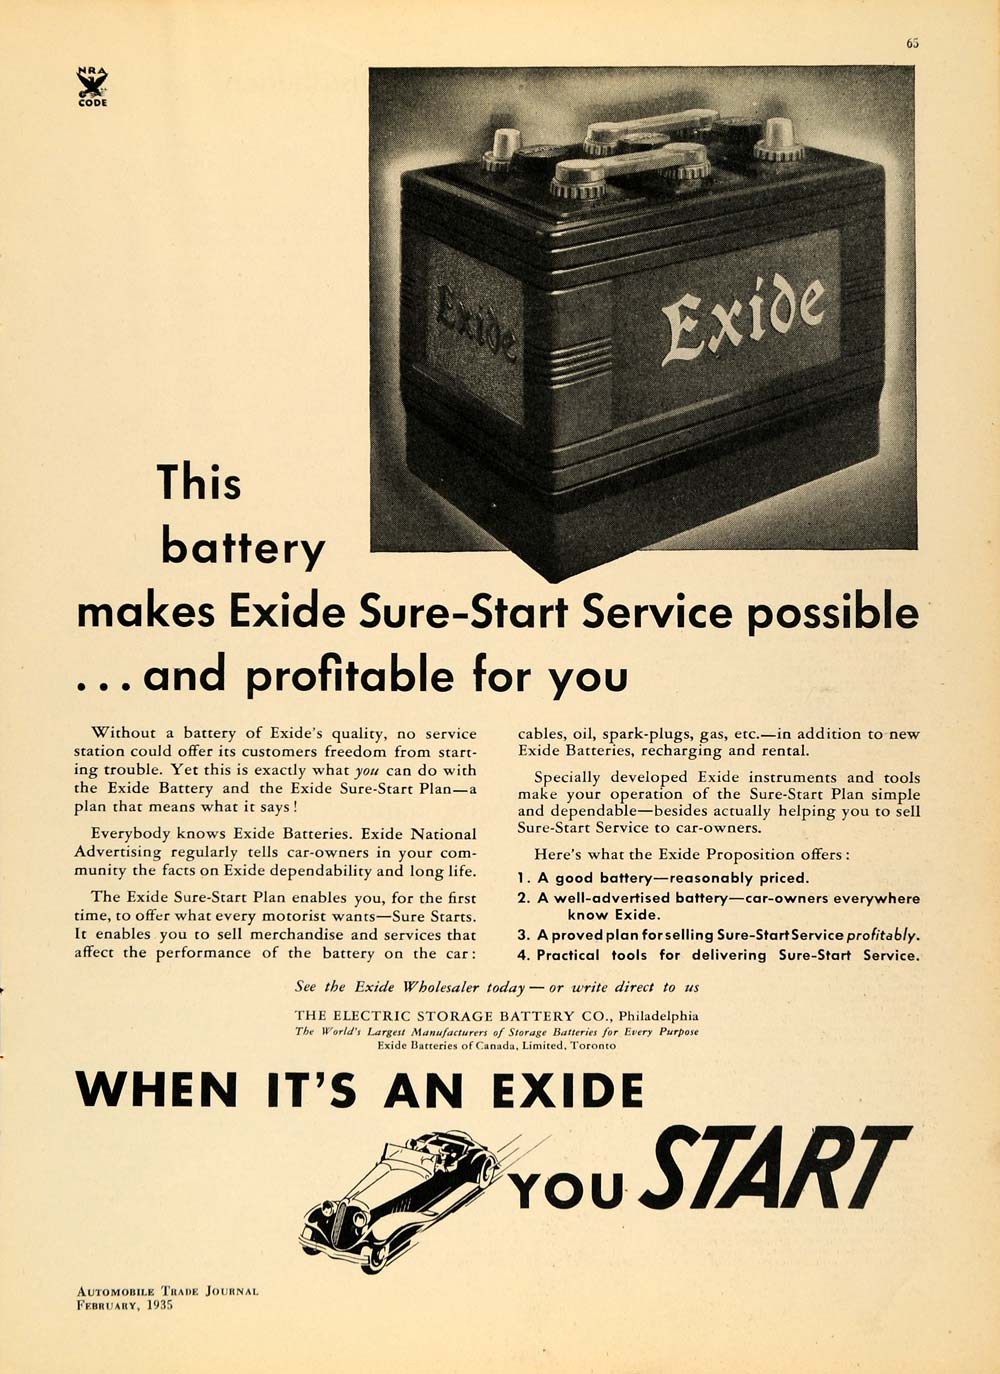 1935 Ad Electric Storage Battery Company Exide Car Battery ATJ1